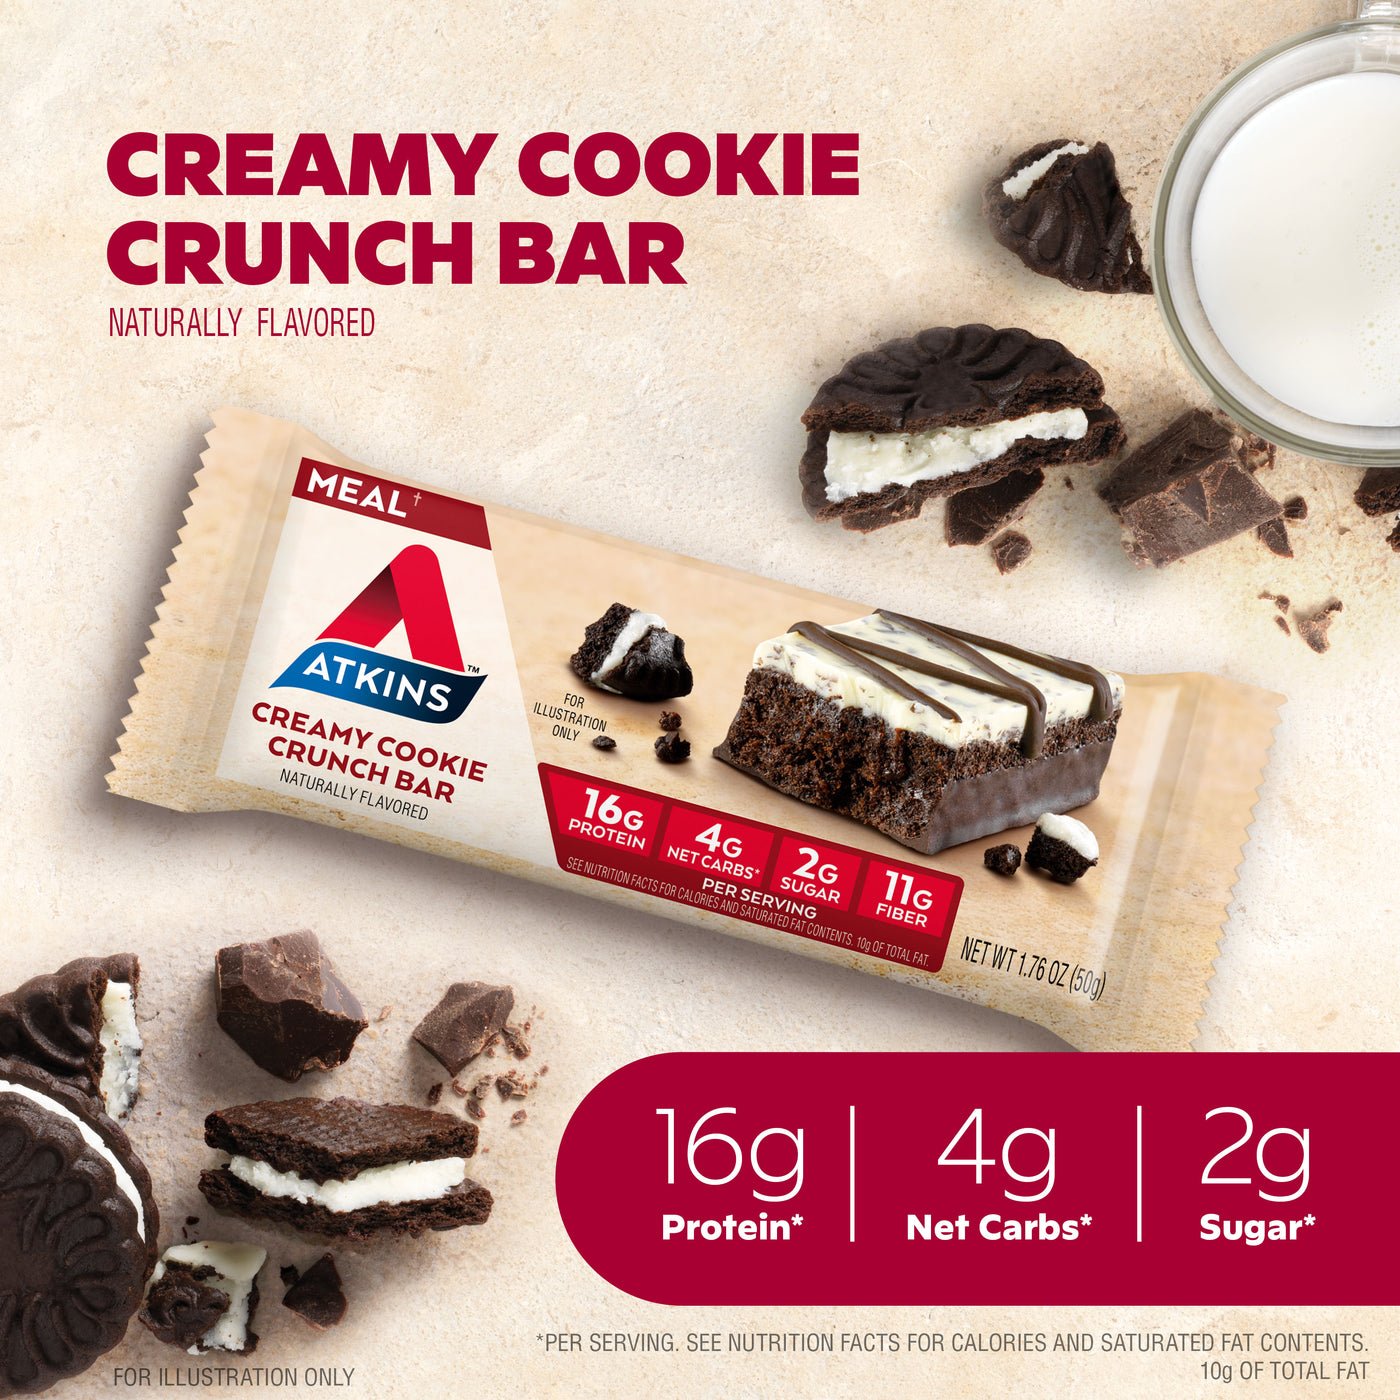 Creamy Cookie Crunch Bar-16g protein, 4g net carbs, 2g sugar